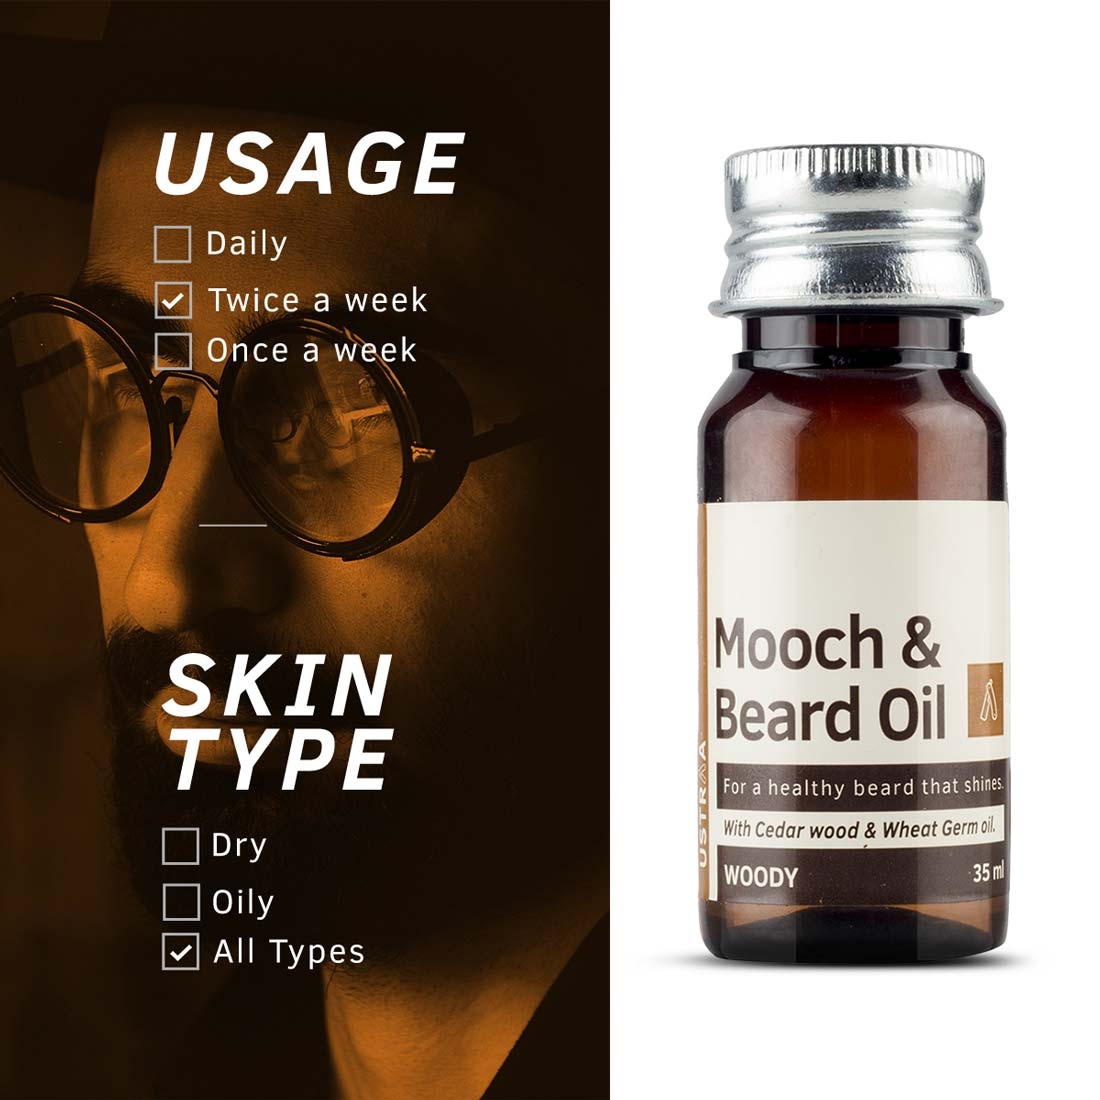 Ustraa | Mooch & Beard Oil - Woody (Pack of 2 x 35 ml) 4